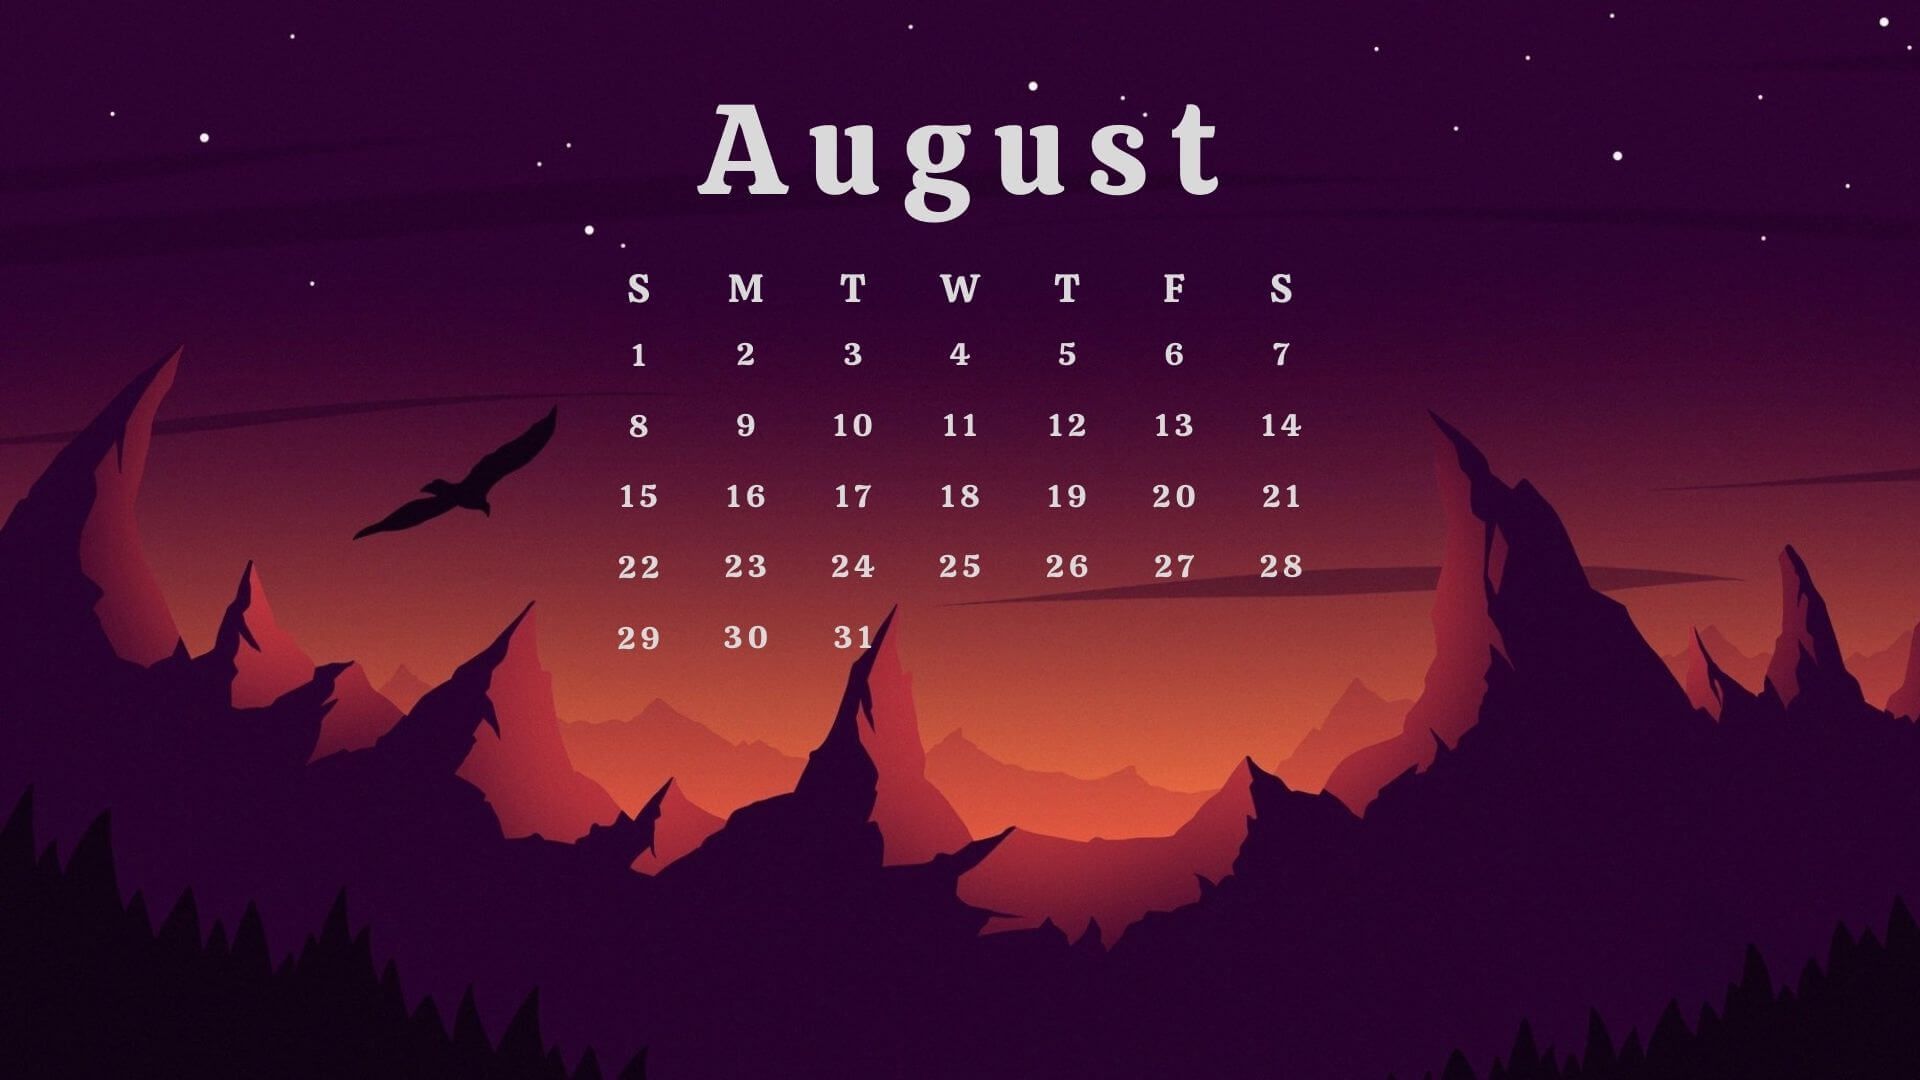 August 2021 Calendar Wallpapers HD Free Download 